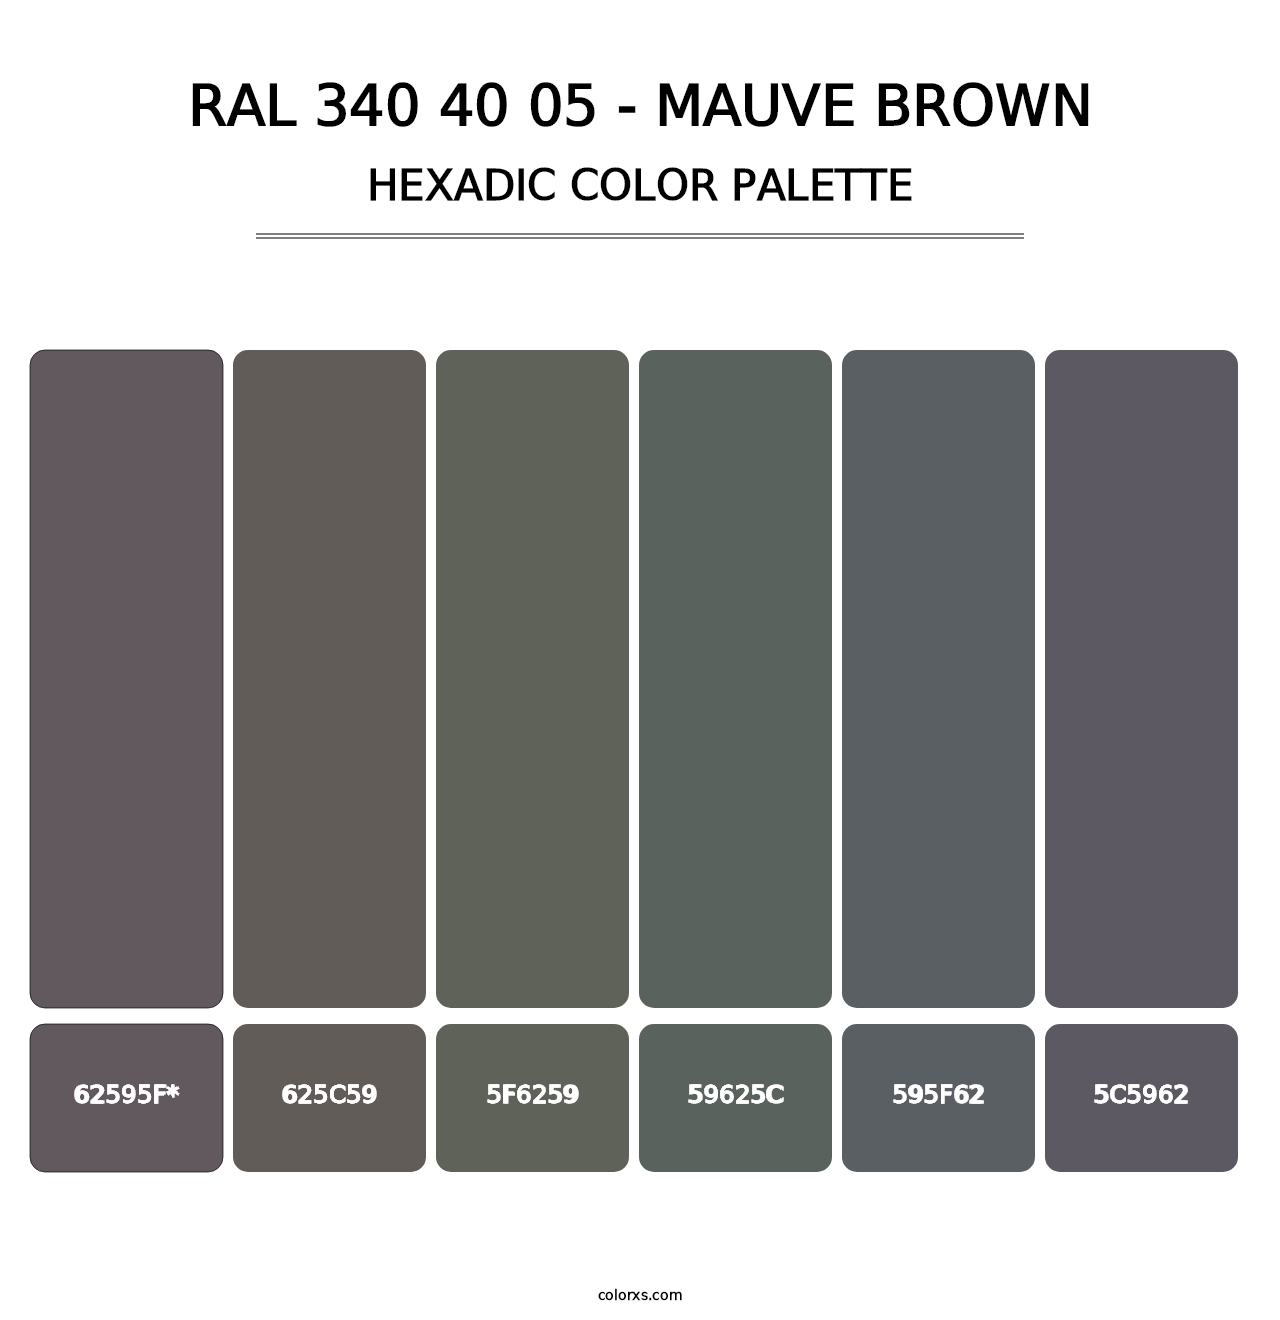 RAL 340 40 05 - Mauve Brown - Hexadic Color Palette